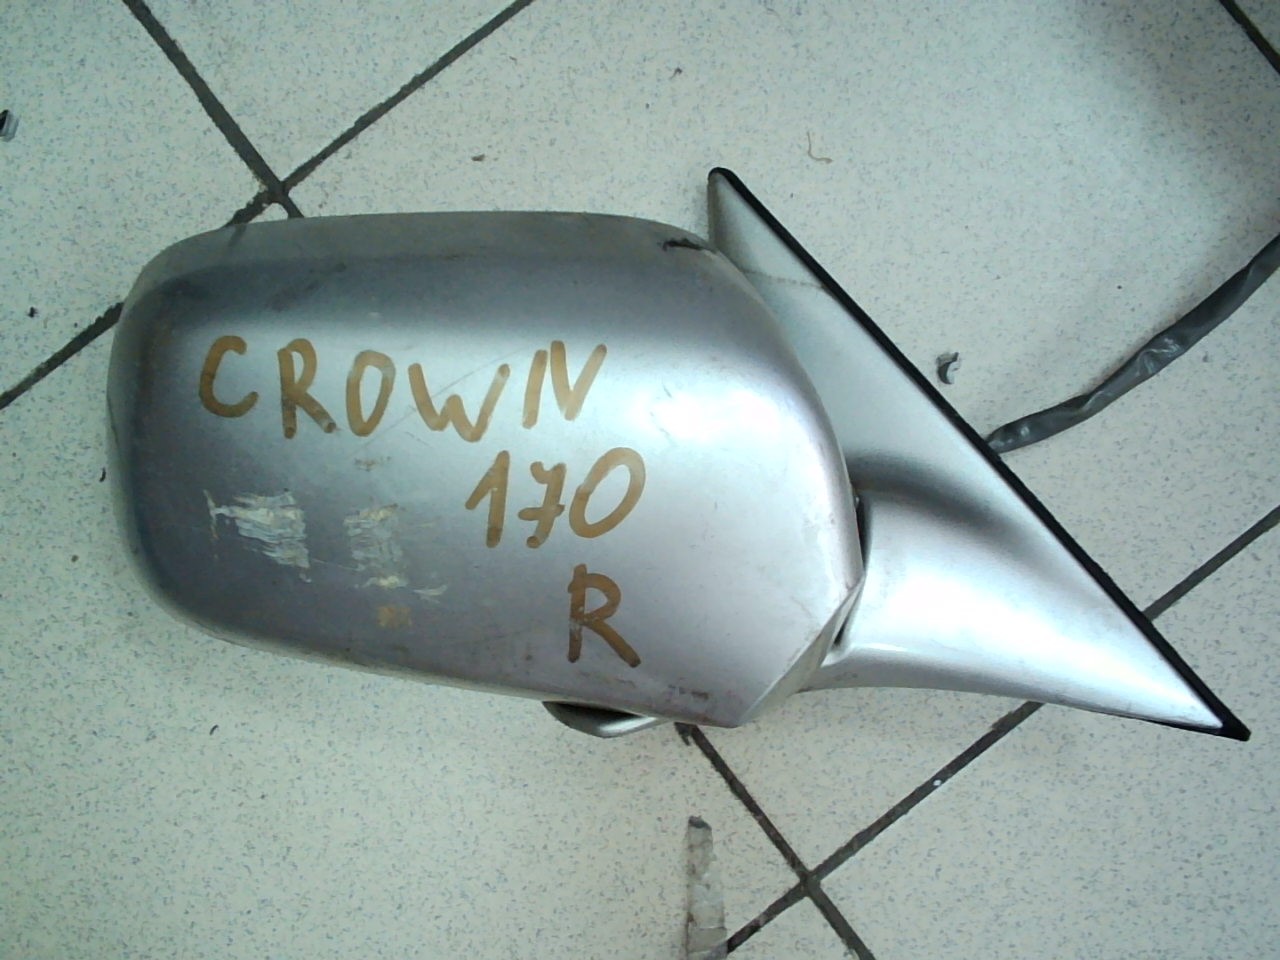 Зеркало TOY CROWN 170 R /7пров. серебро/ 563065 на TOYOTA CROWN